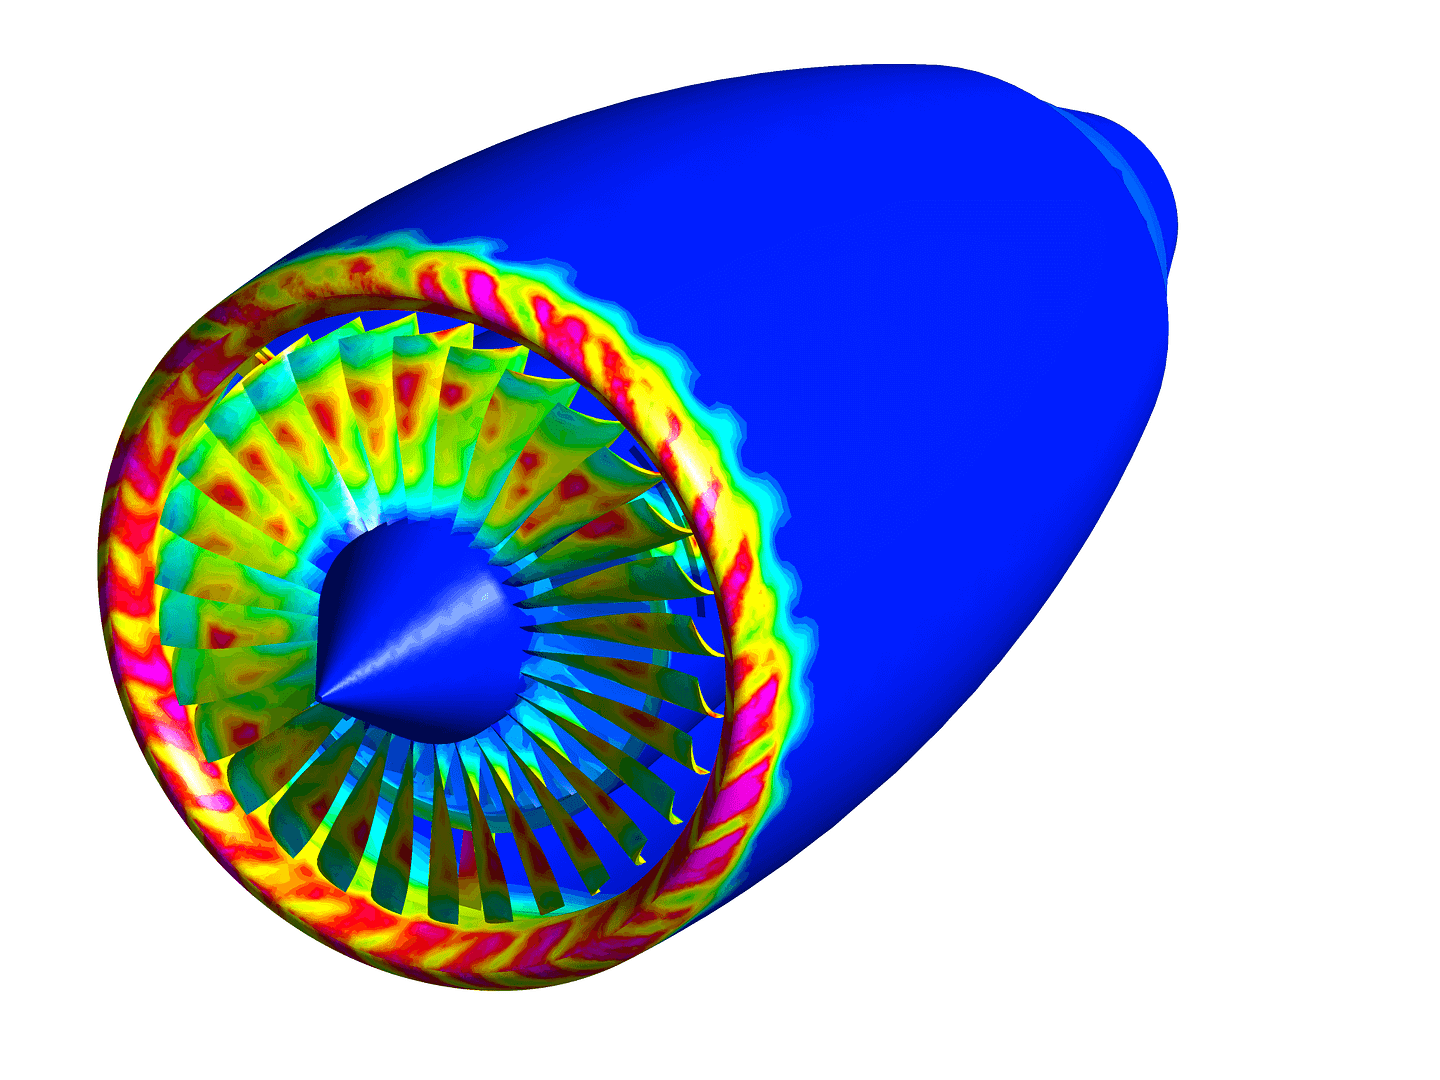 Computational Fluid Dynamicsus image (2)